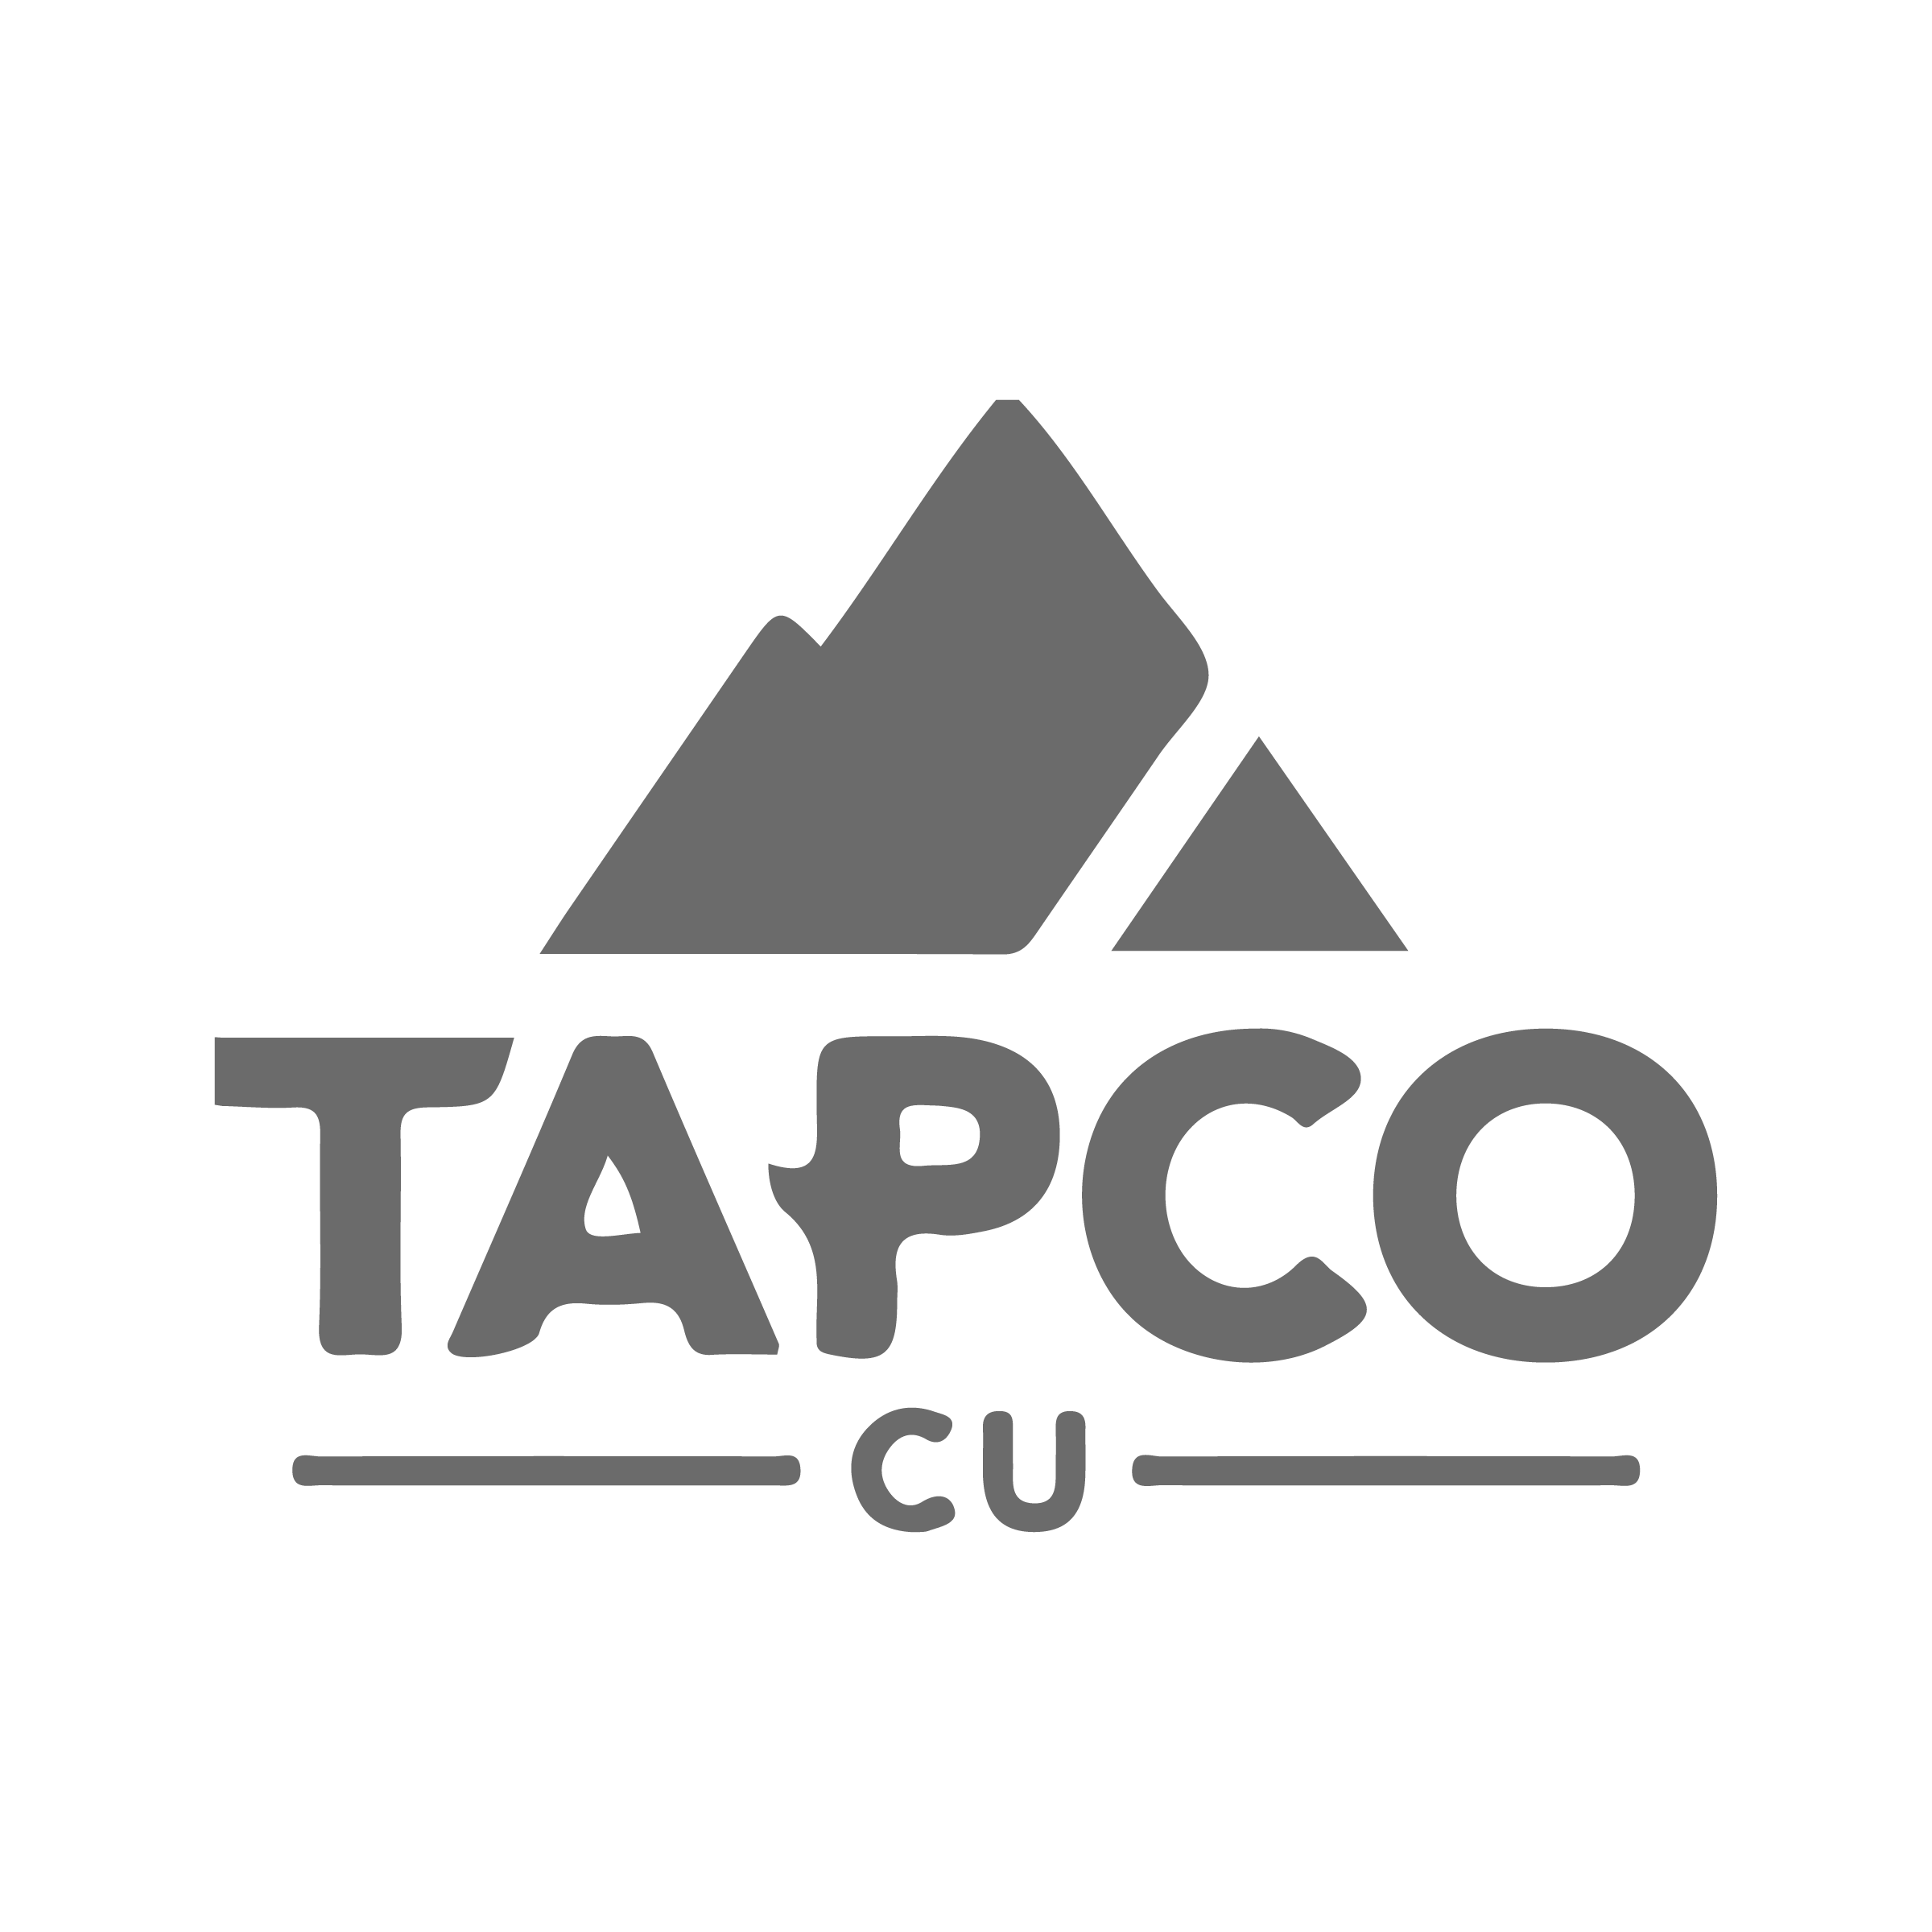 TapcoCU_LogoGrey